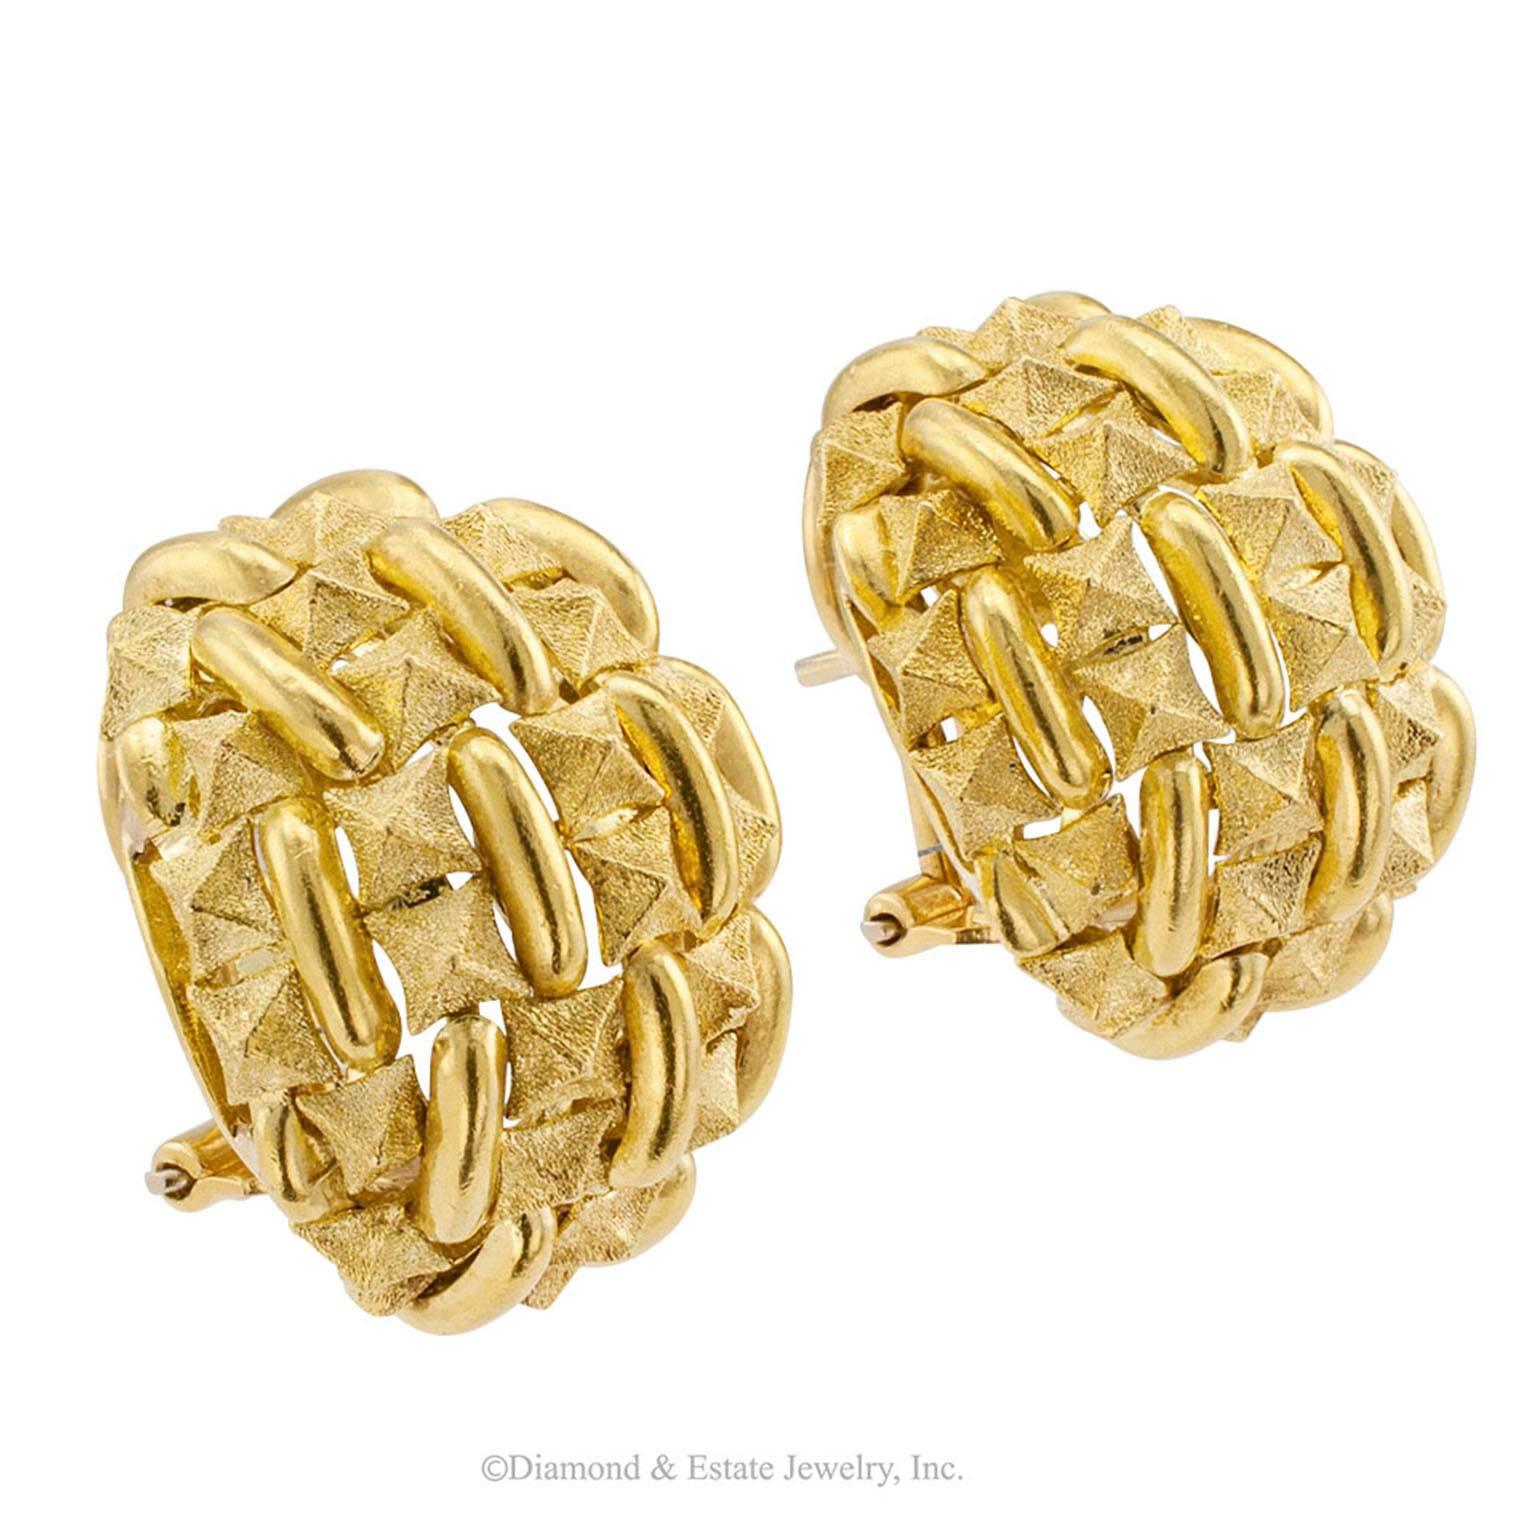 Women's 1970s Domed Textured Gold Earrings